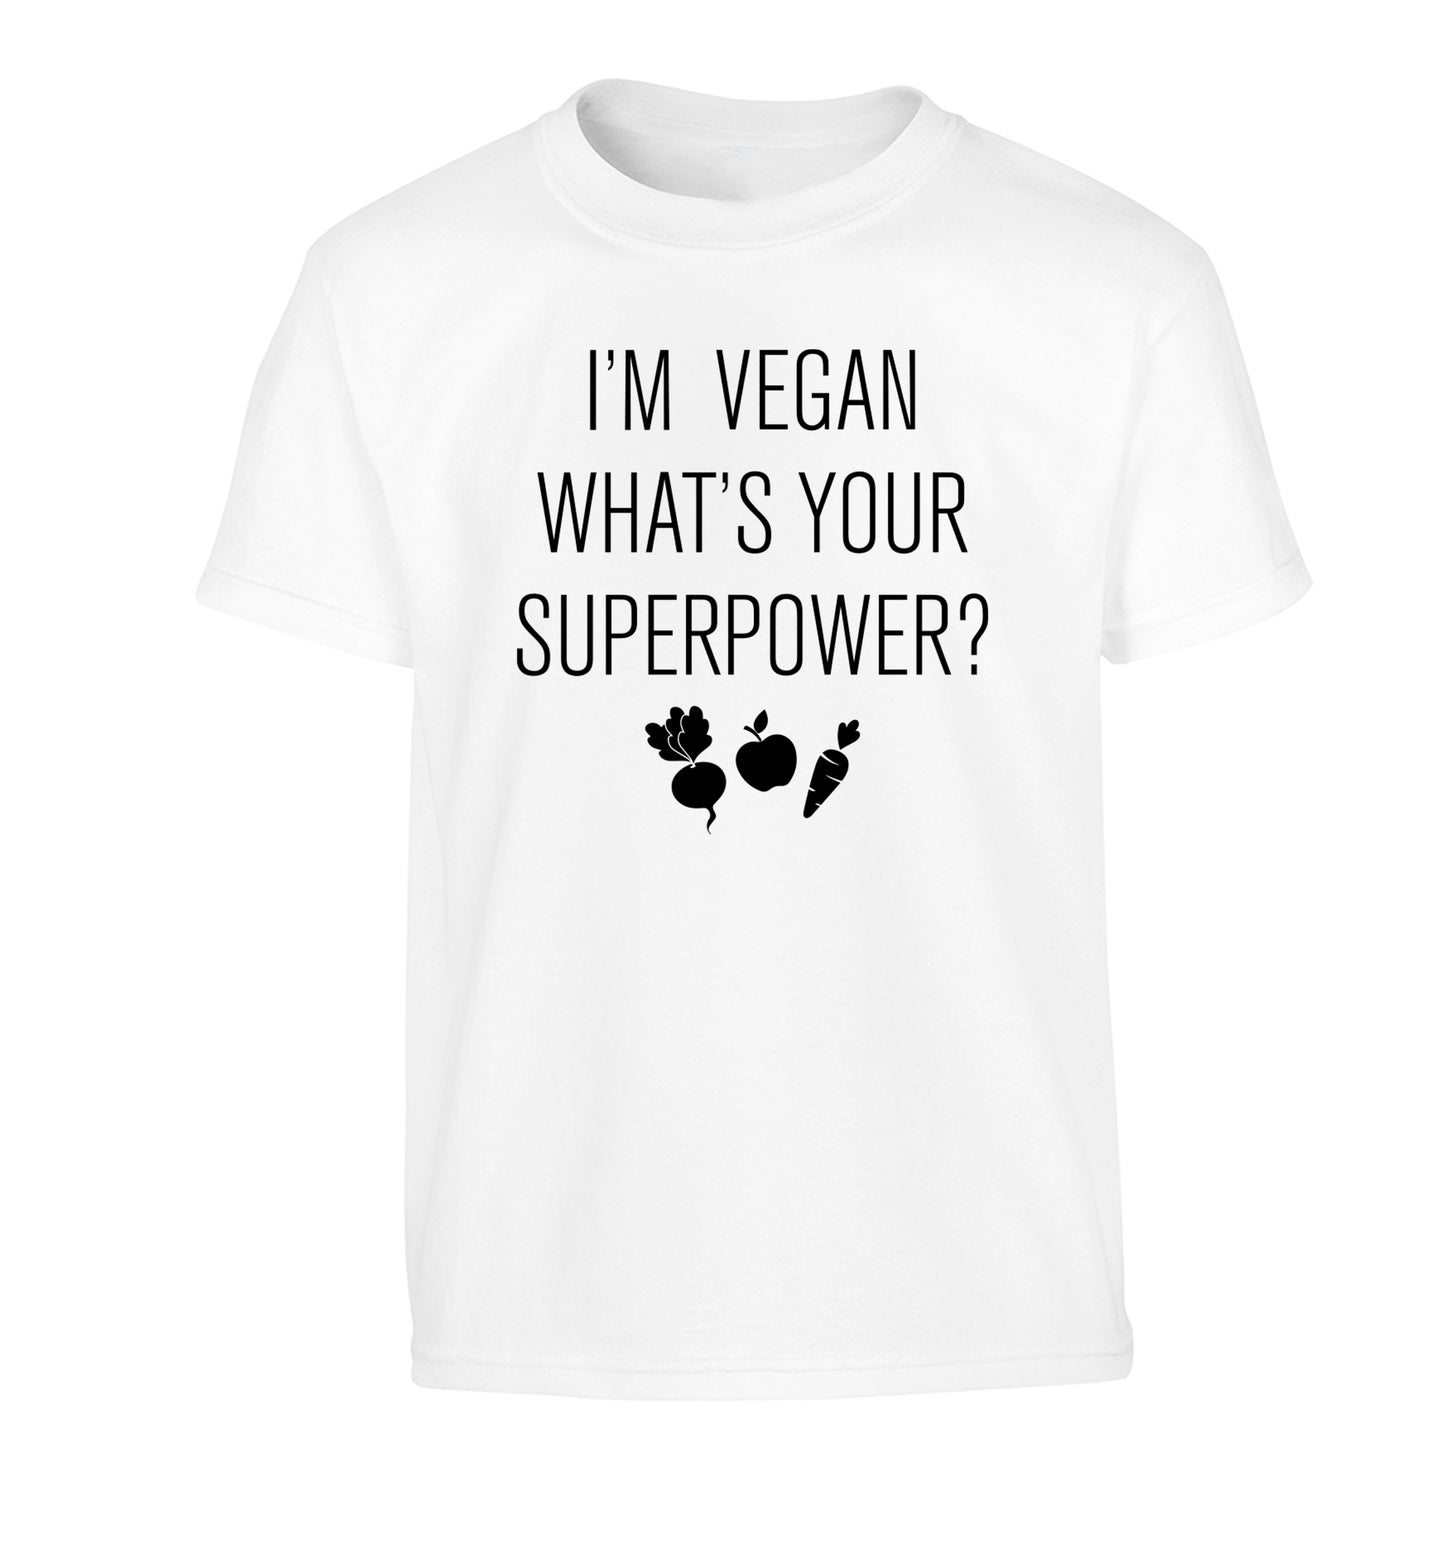 I'm Vegan What's Your Superpower? Children's white Tshirt 12-13 Years